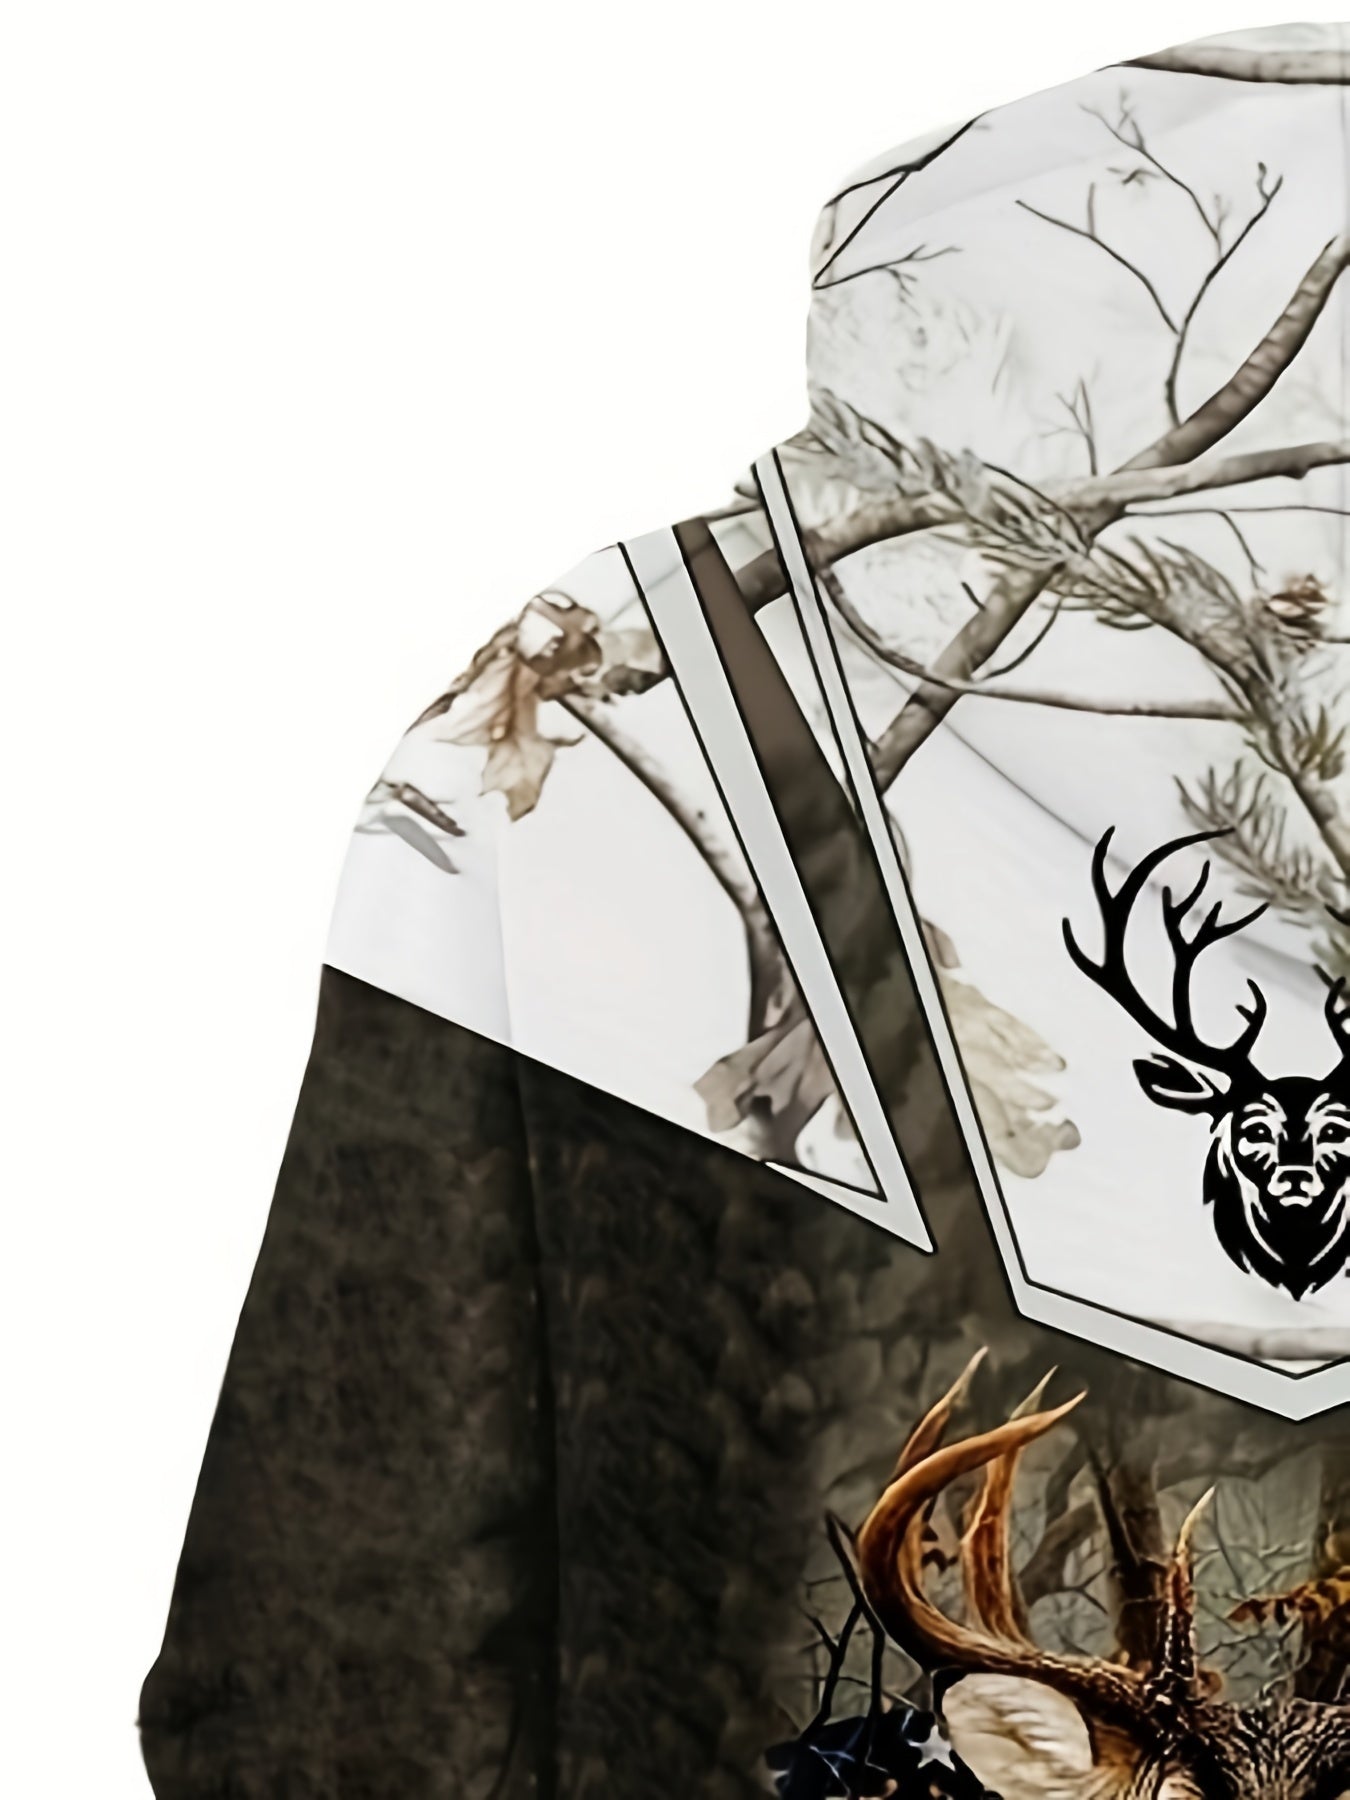 Creative Deer Pattern Men's Color Block Hooded Sweatshirt With Drawstring And Kangaroo Pocket, Fall Winter